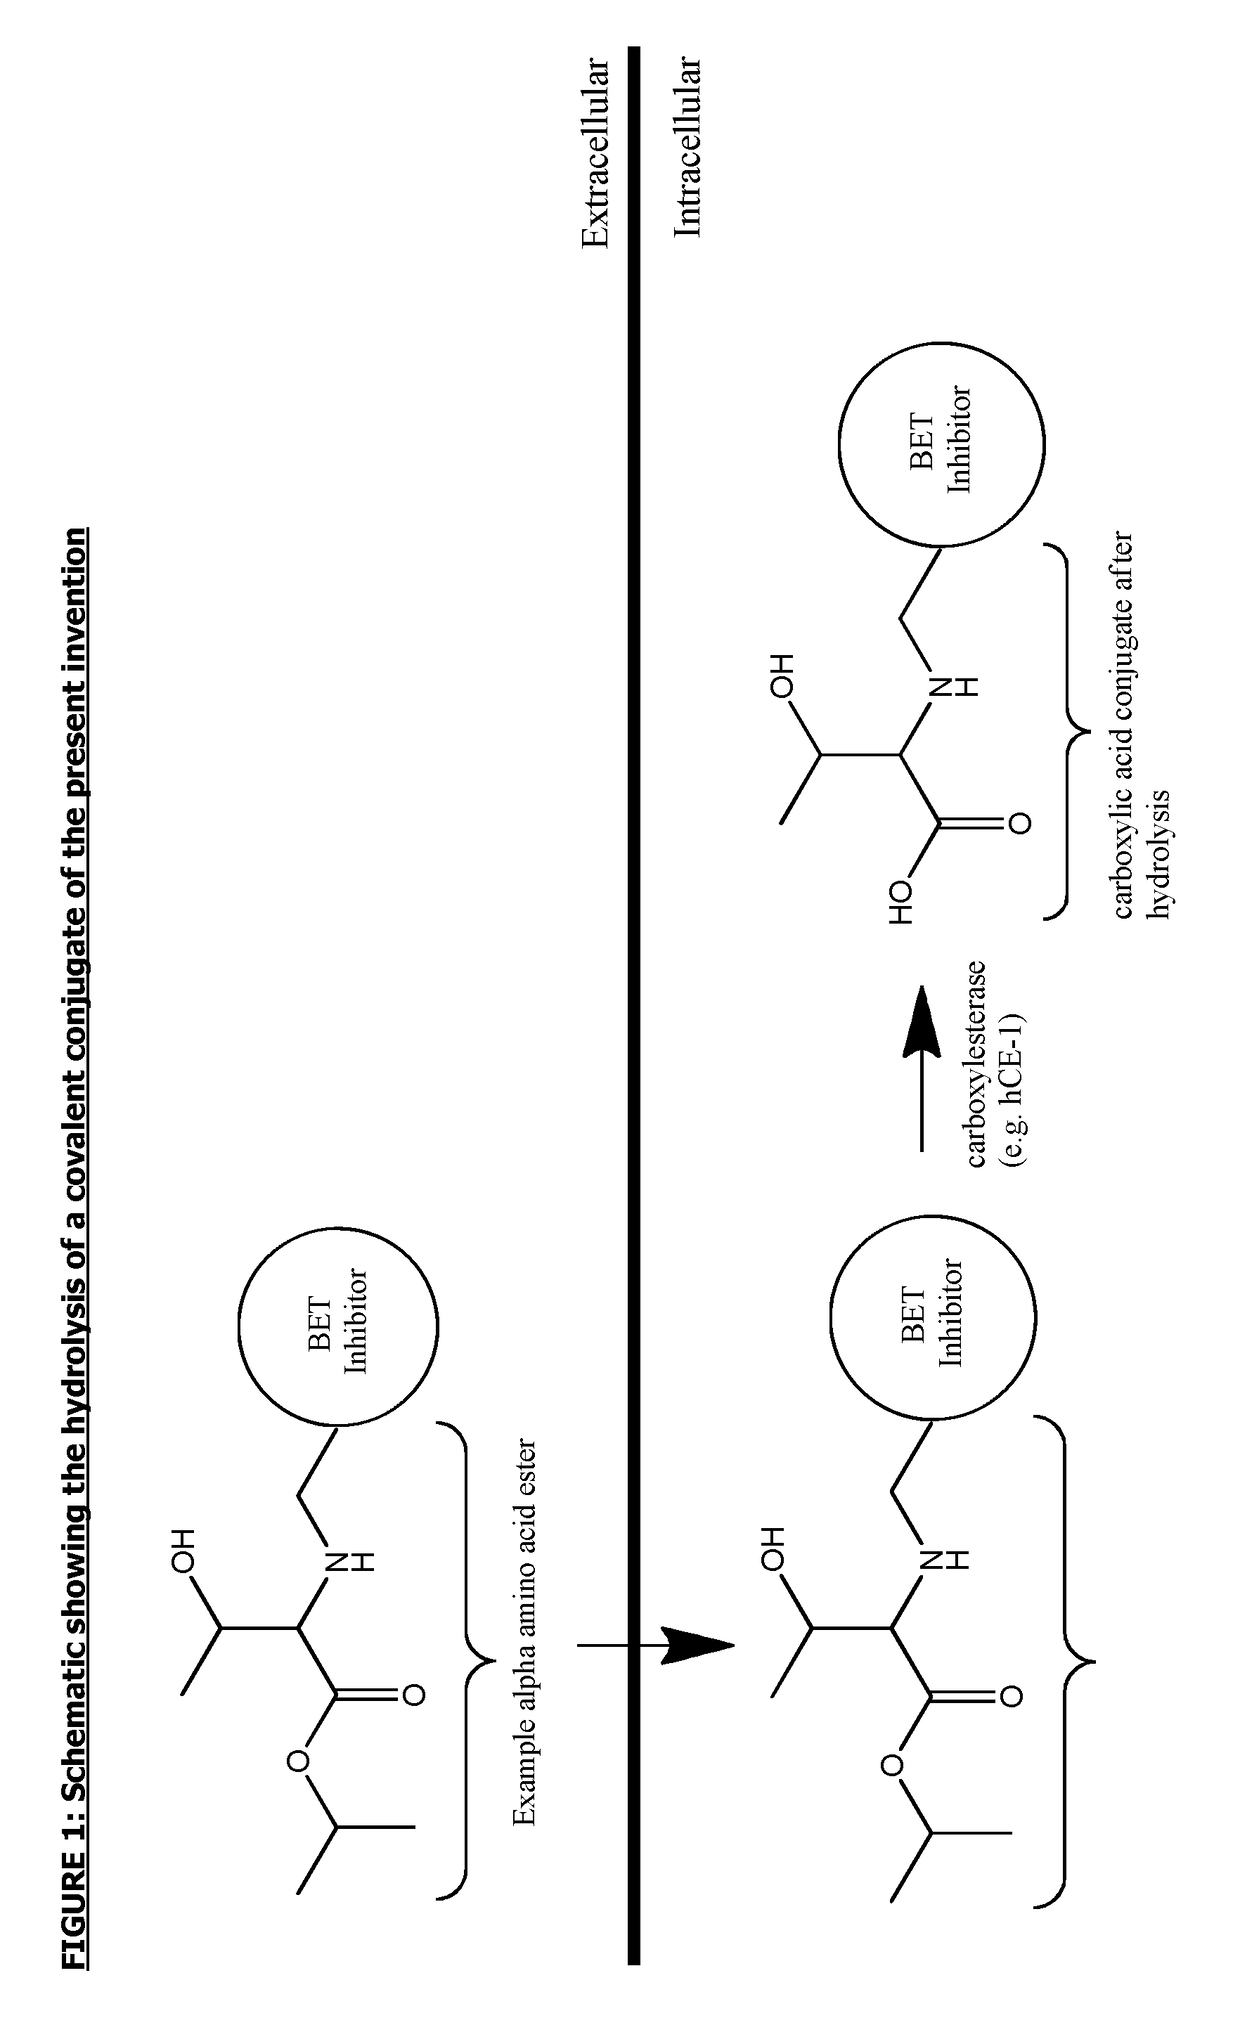 Covalent conjugates of bet inhibitors and alpha amino acid esters